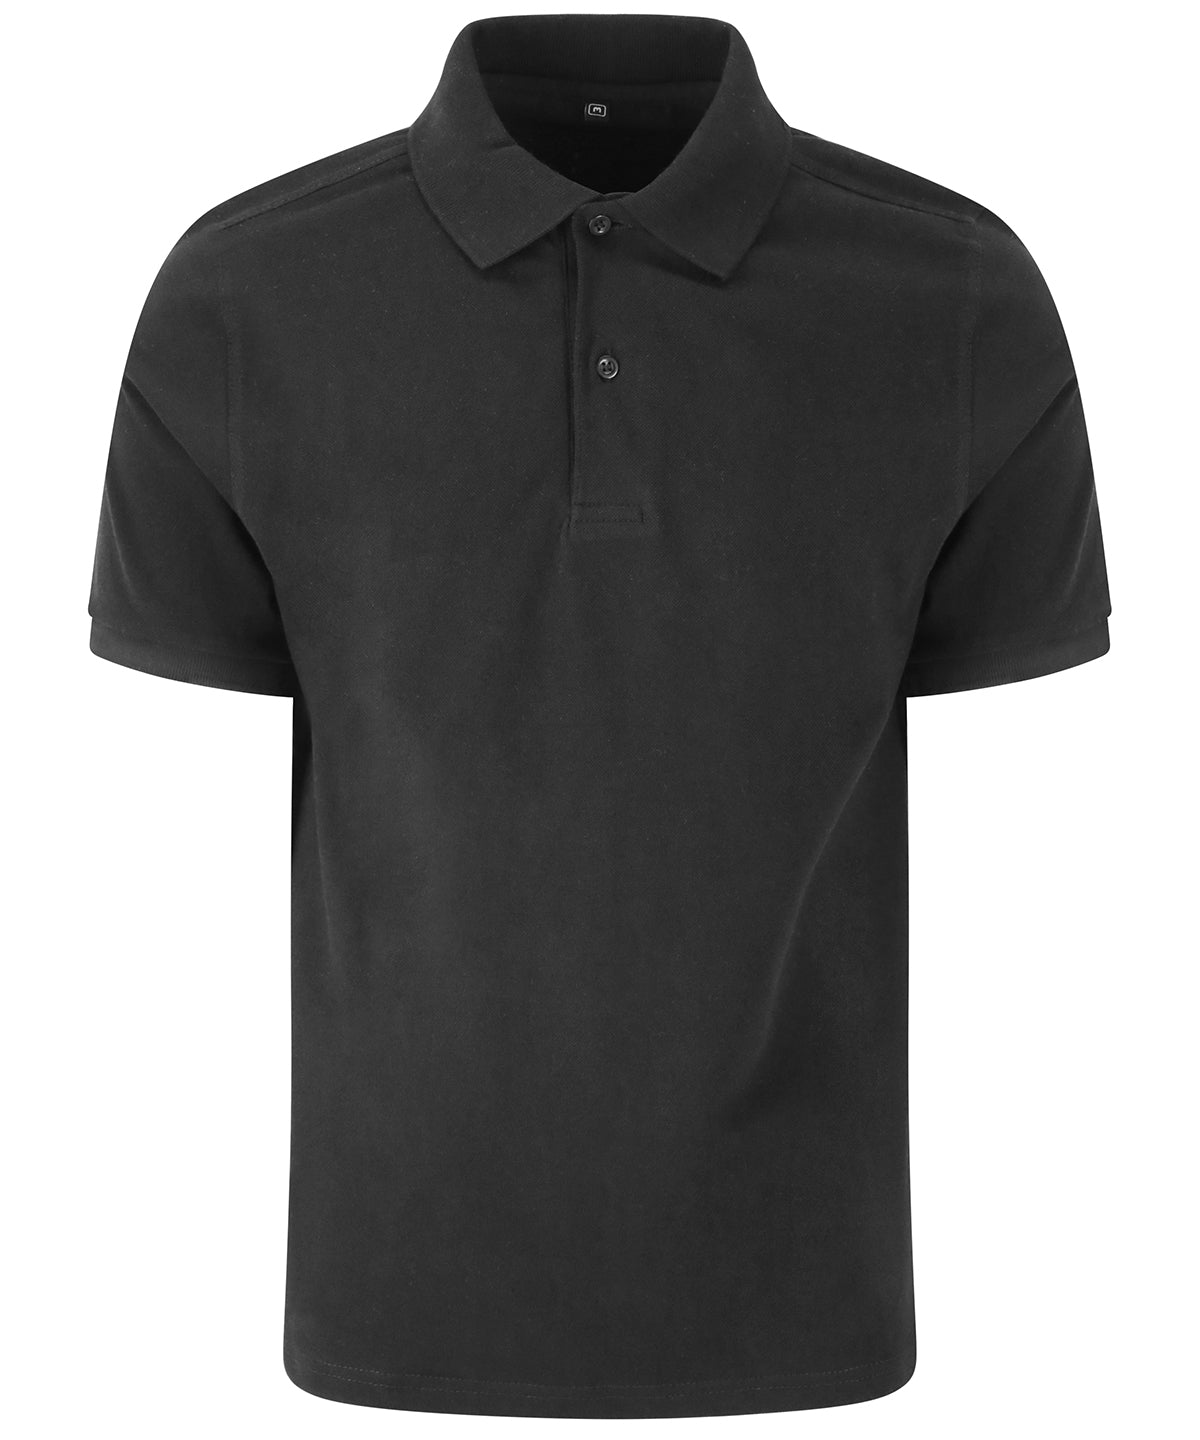 Personalised Polo Shirts - Black AWDis Just Polo's Stretch polo